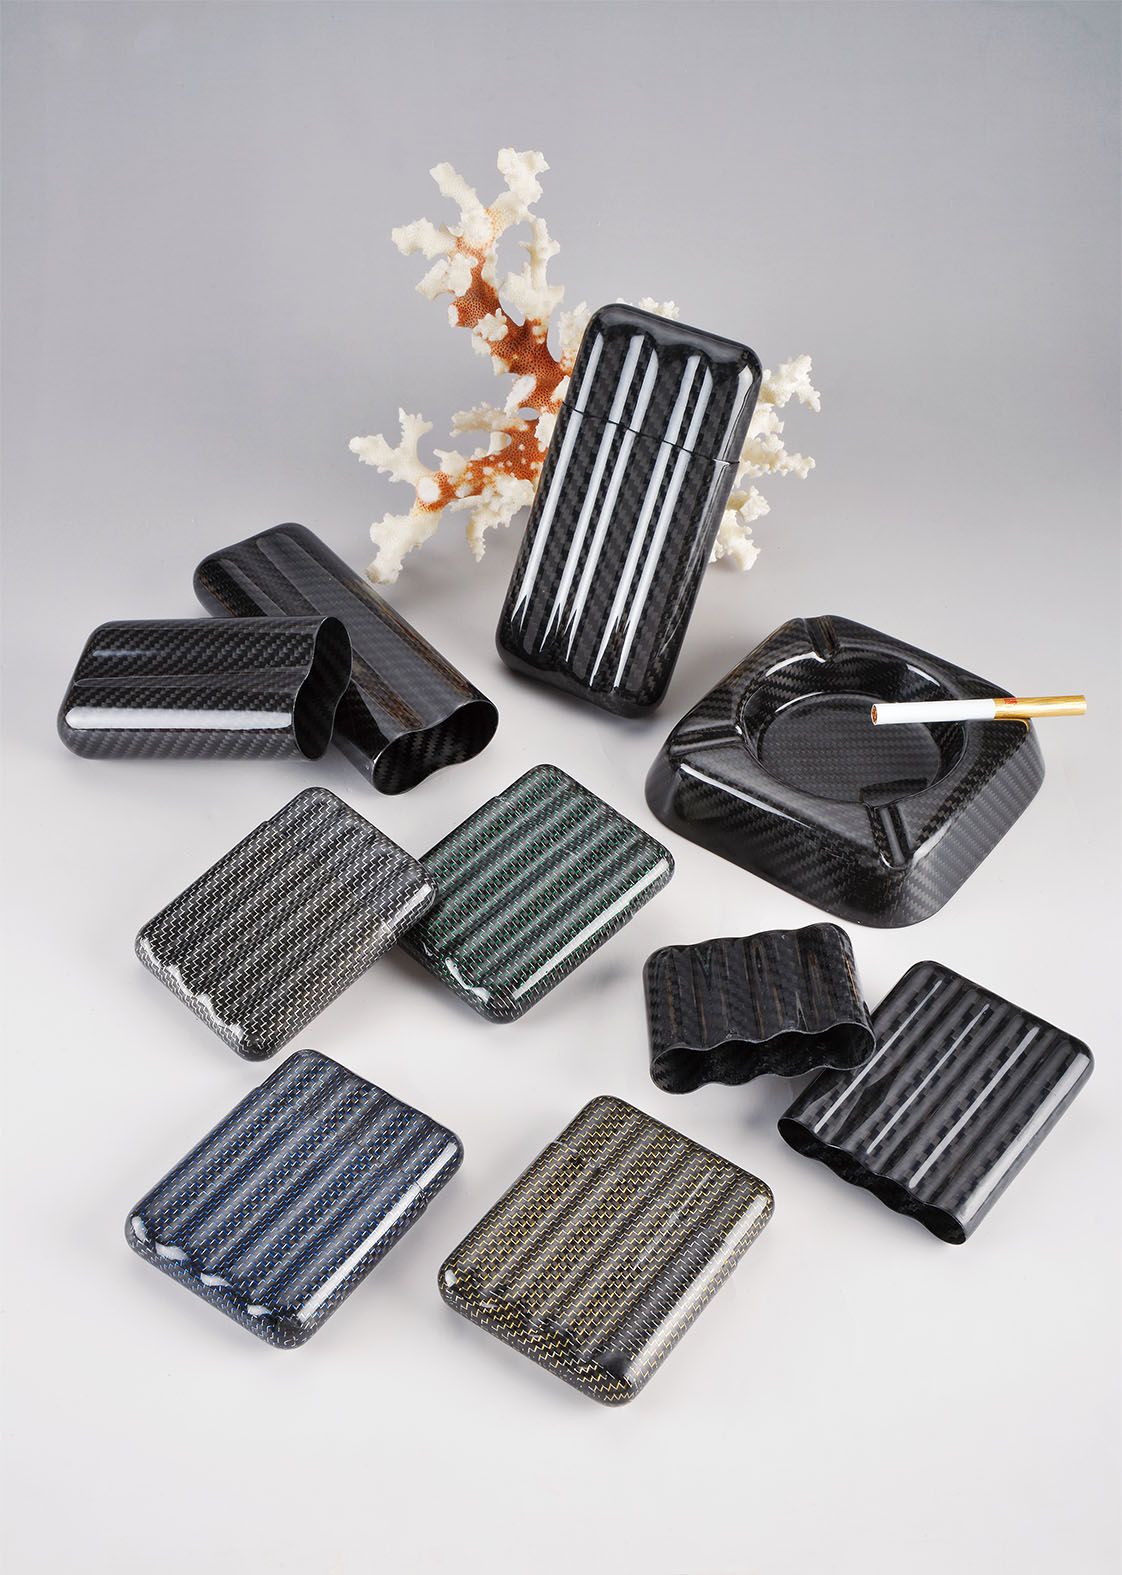 Carbon fiber accessories